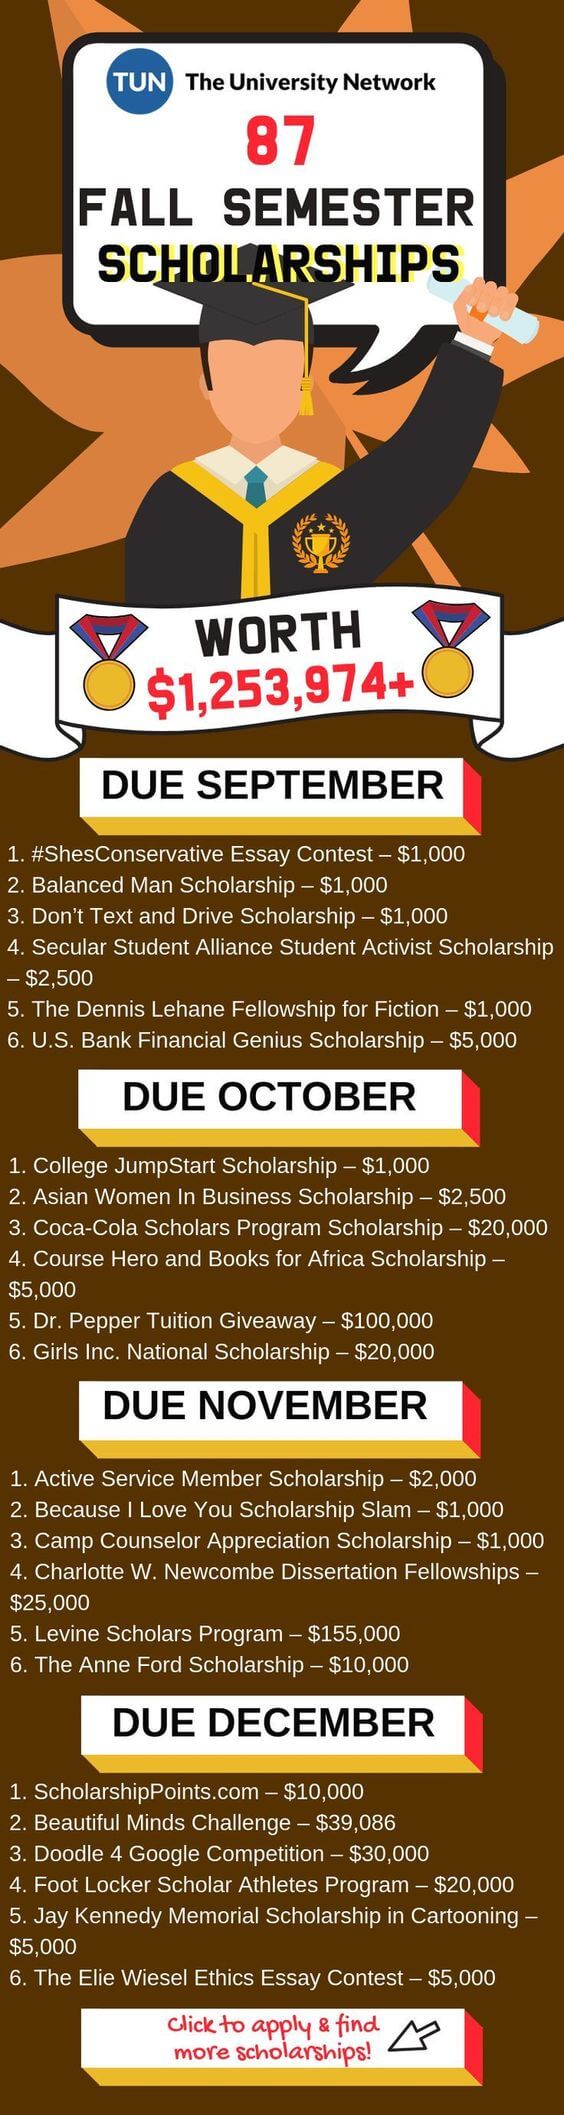 fall semester scholarships